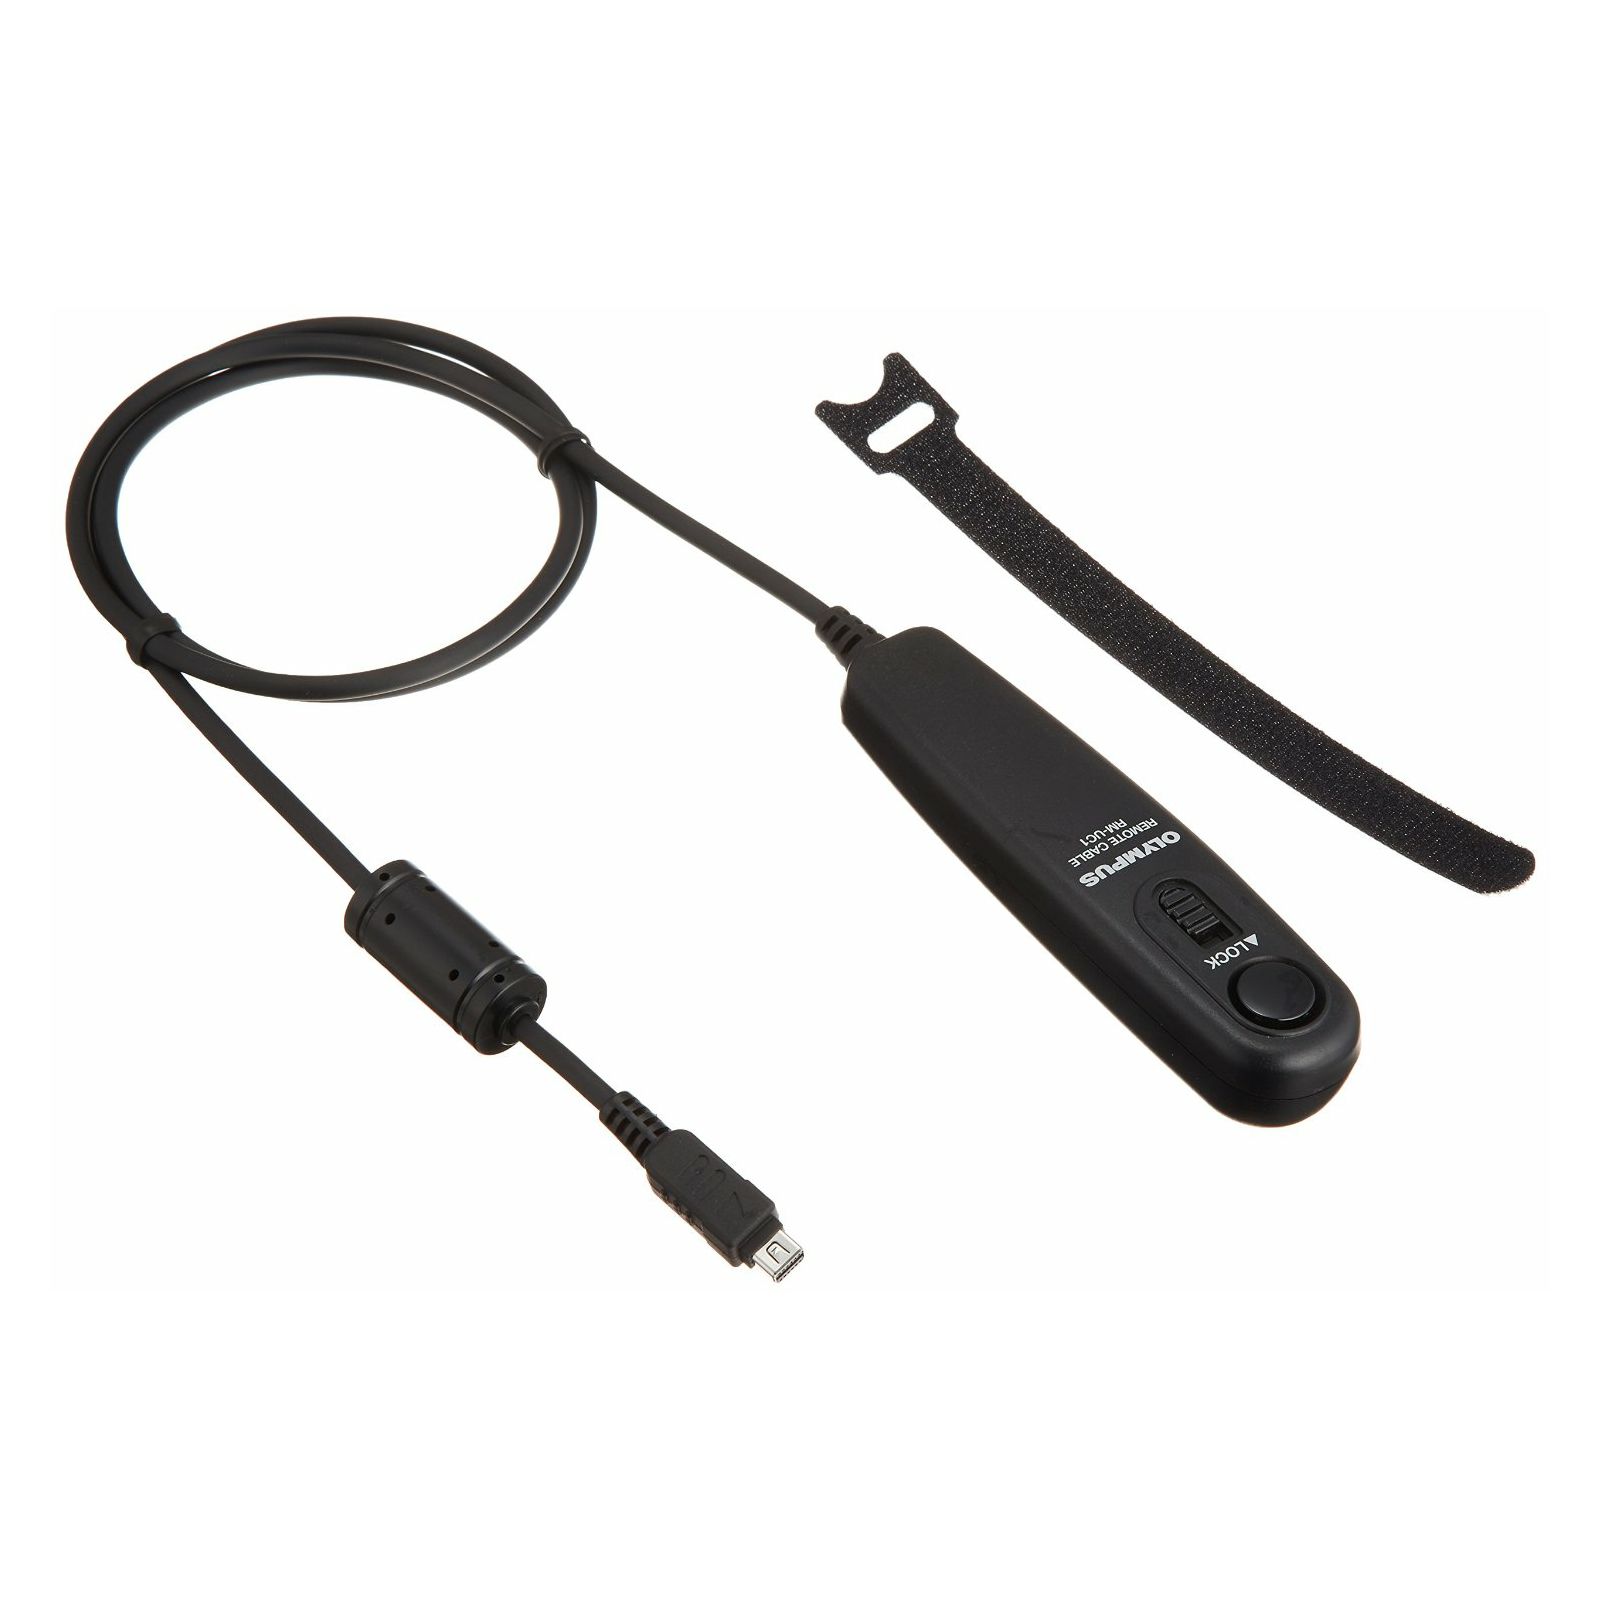 Olympus RM-UC1(W) USB Remote cable Control for E-30/E-620/E-5xx/E-4xx, E-PL2, E-P1, E-P2 & SP-510/550/560 N2525400